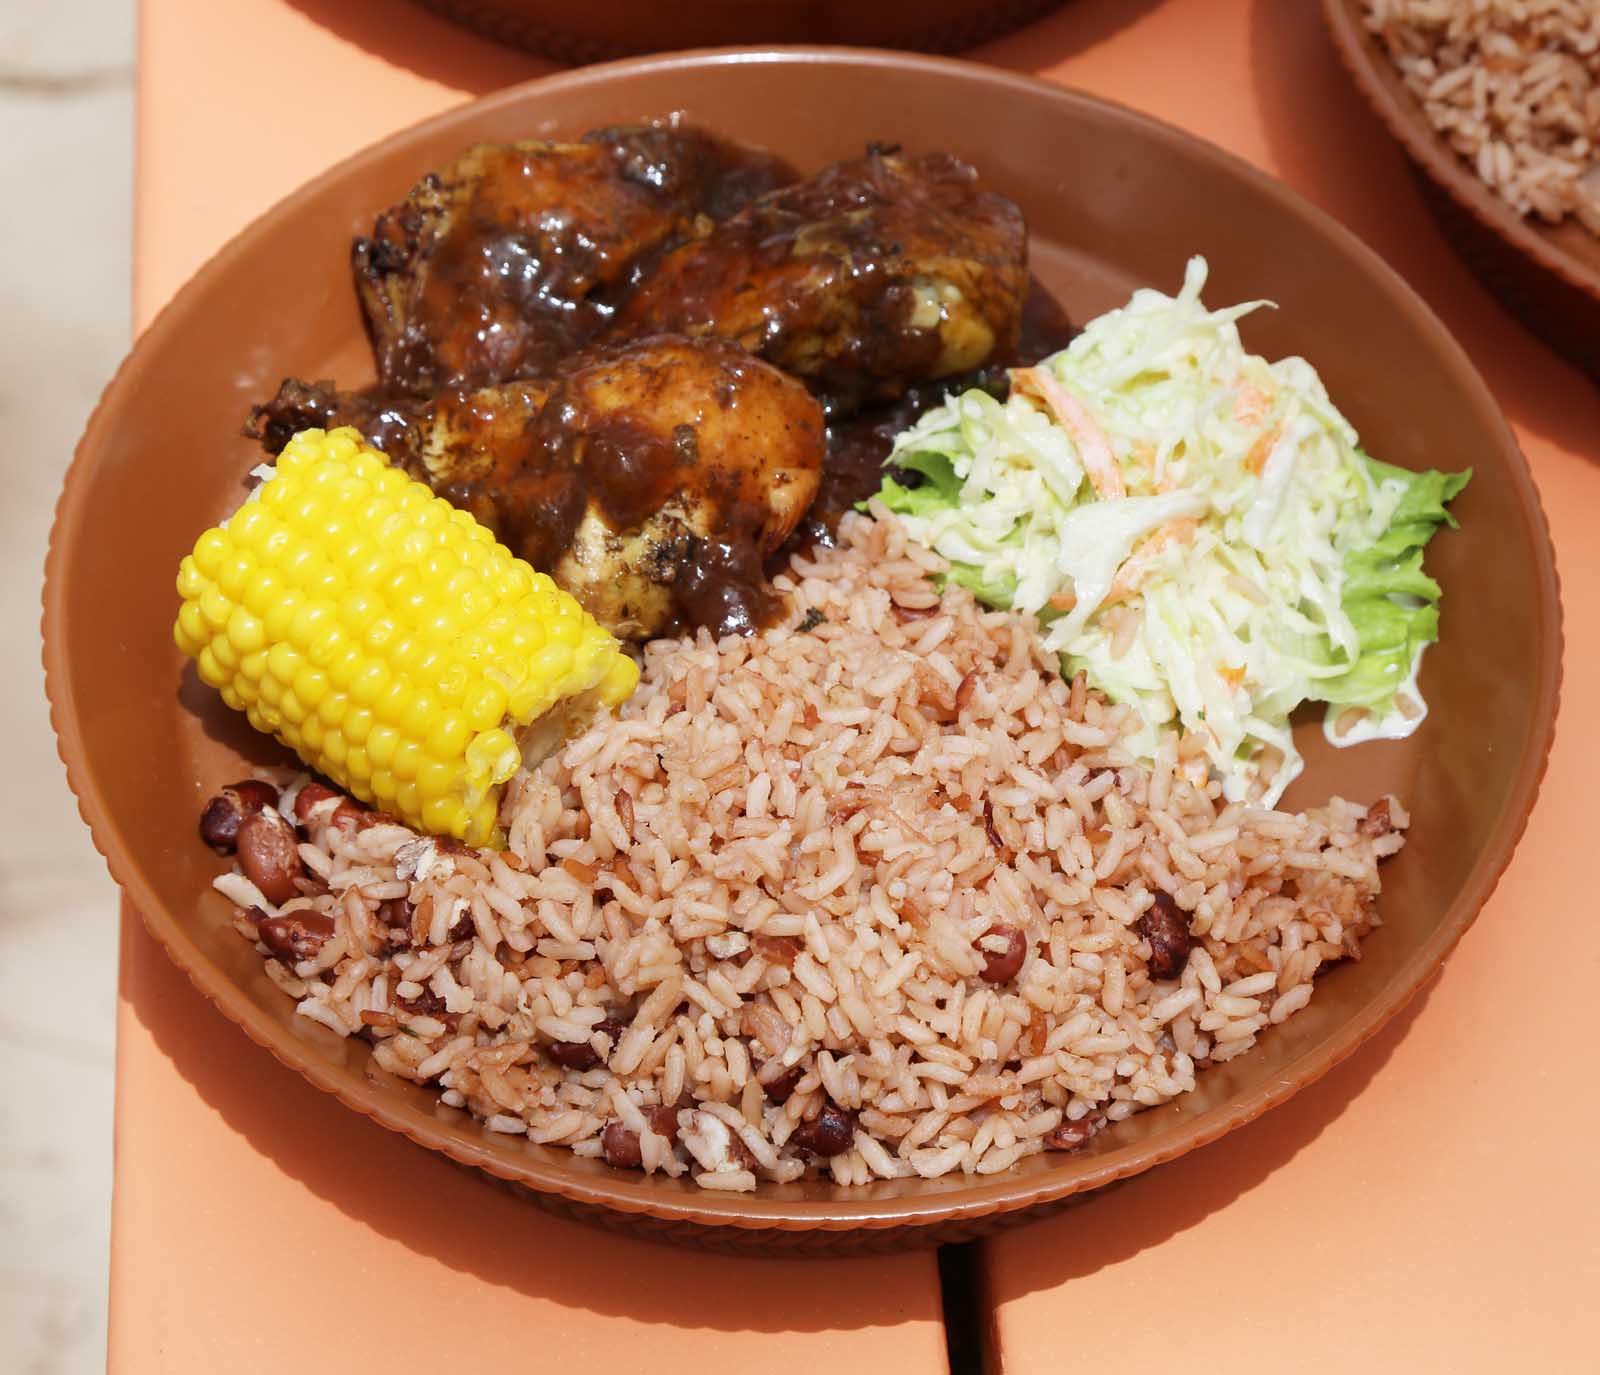 Jerk Chicken in Jamaica